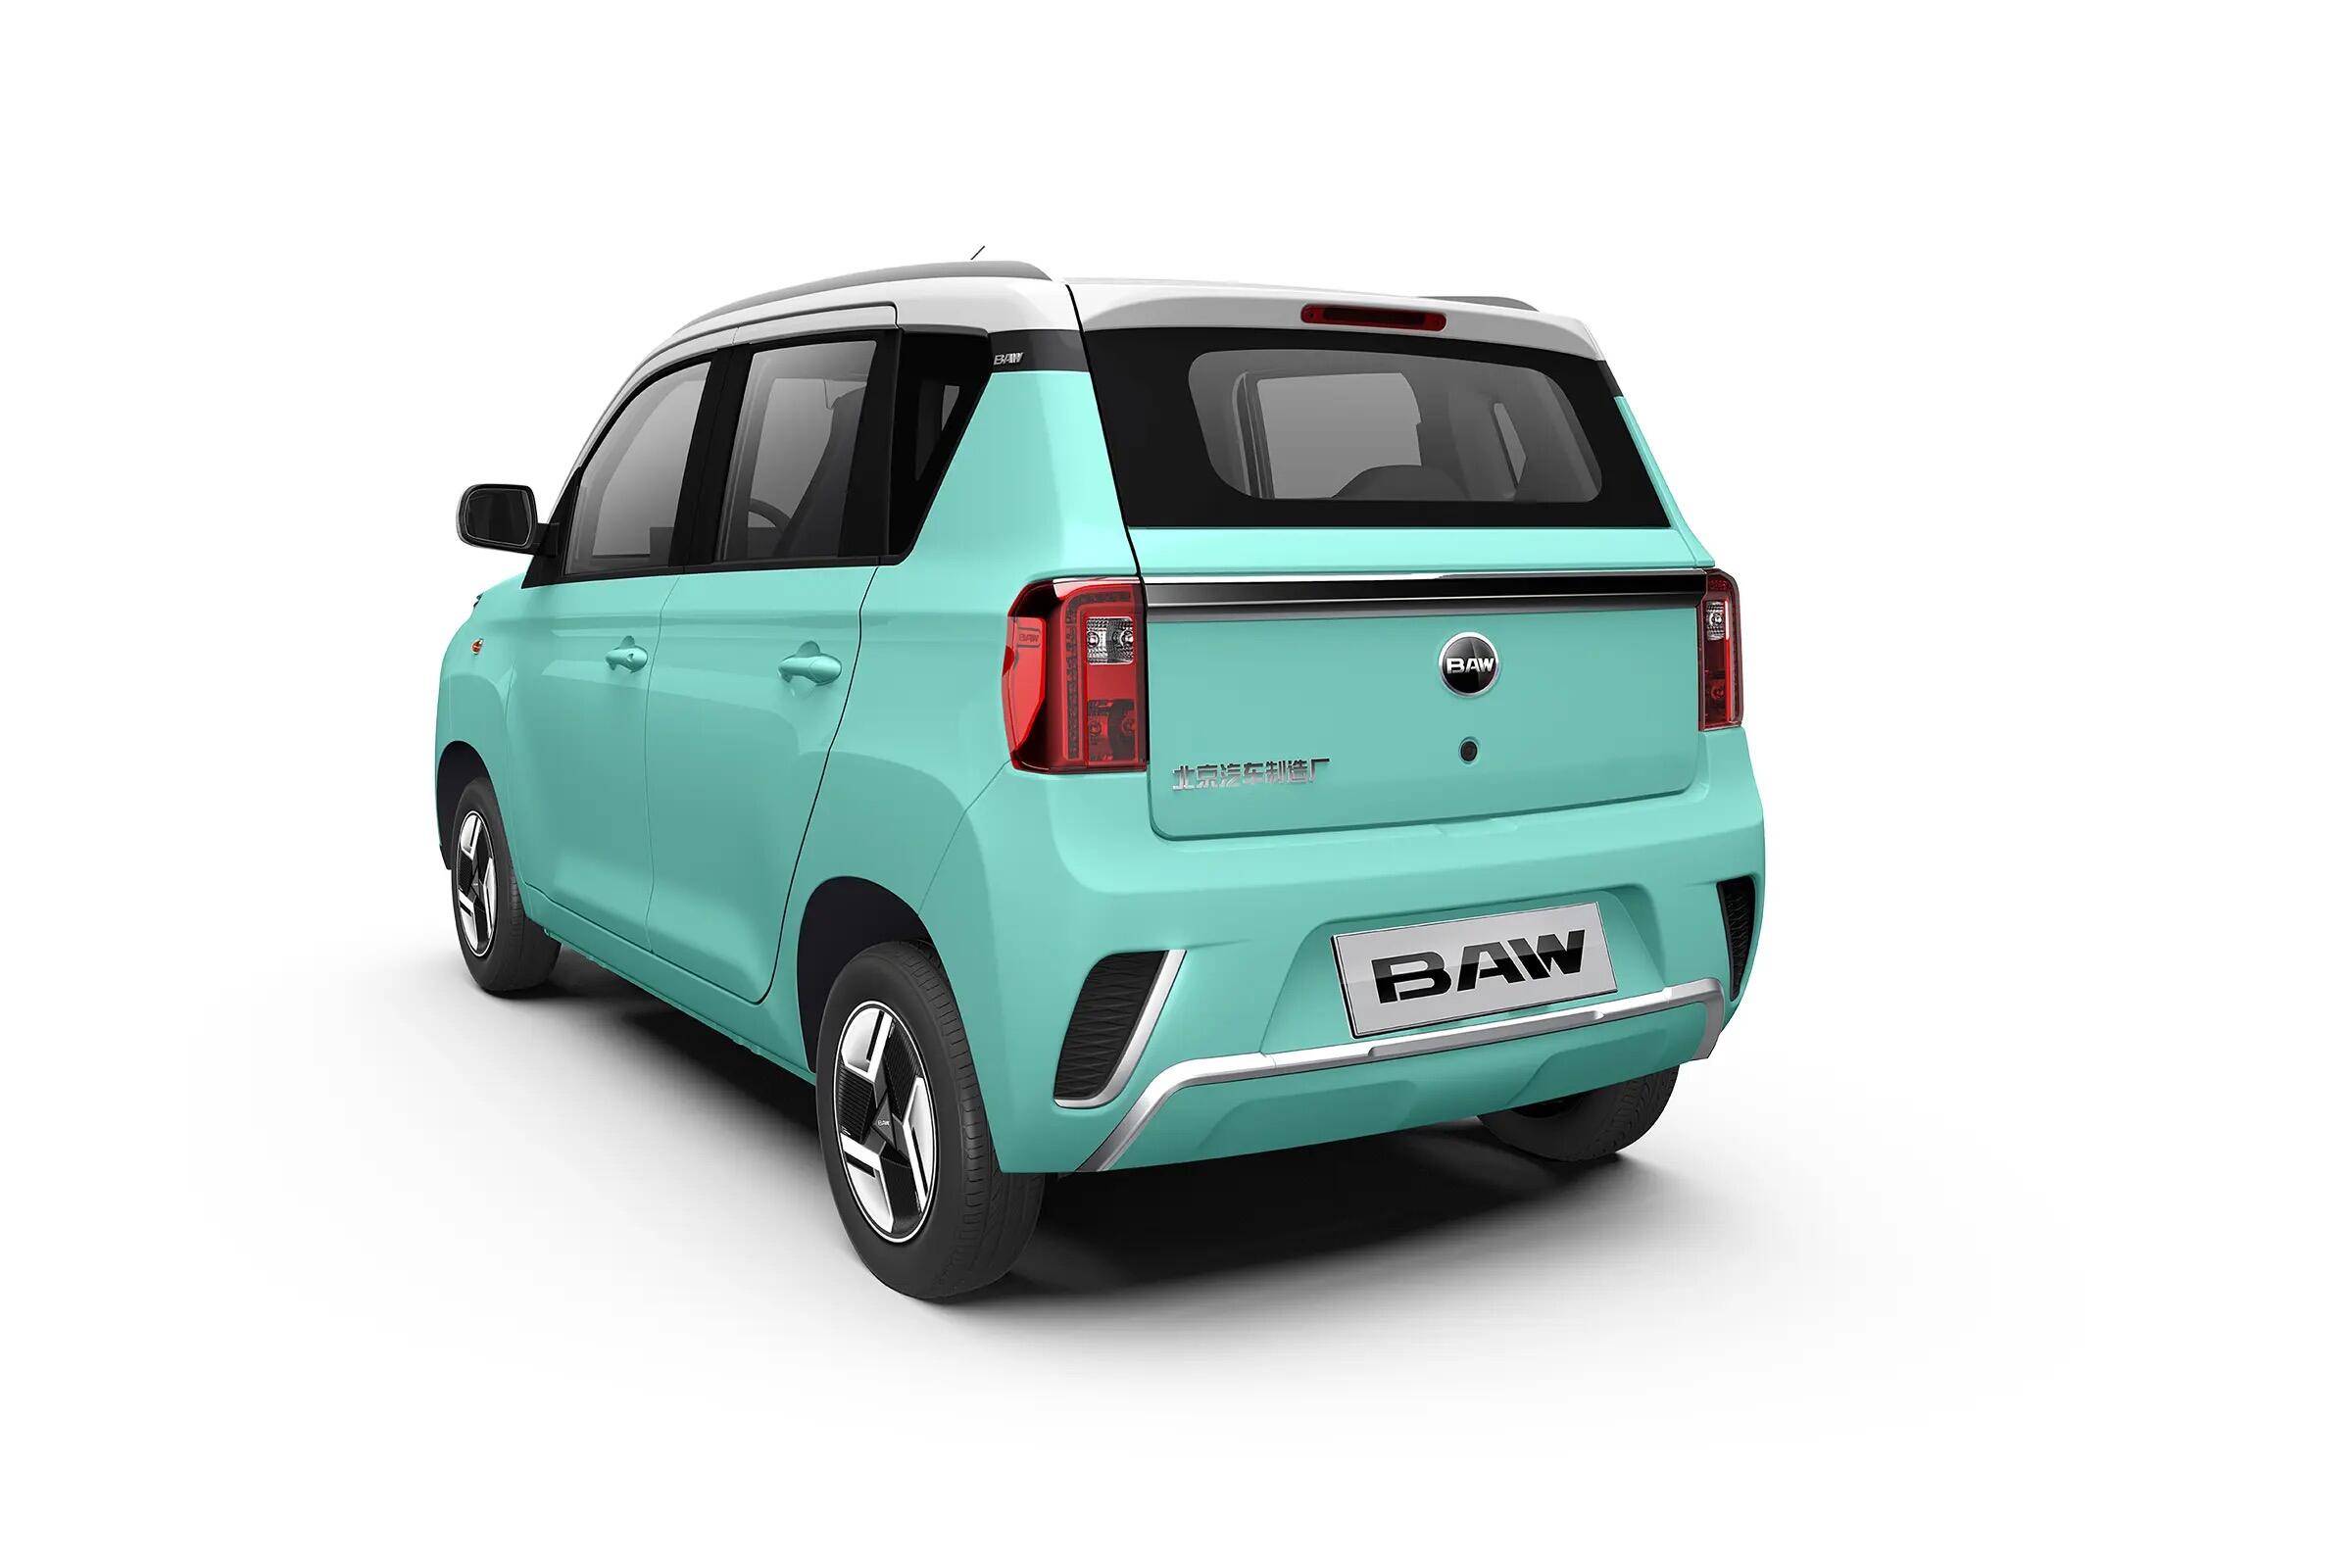 2023 Mini BAIC Jia Bao New Energy Vehicle Eco-friendly transportation solution electric MINI used car for adult manufacture